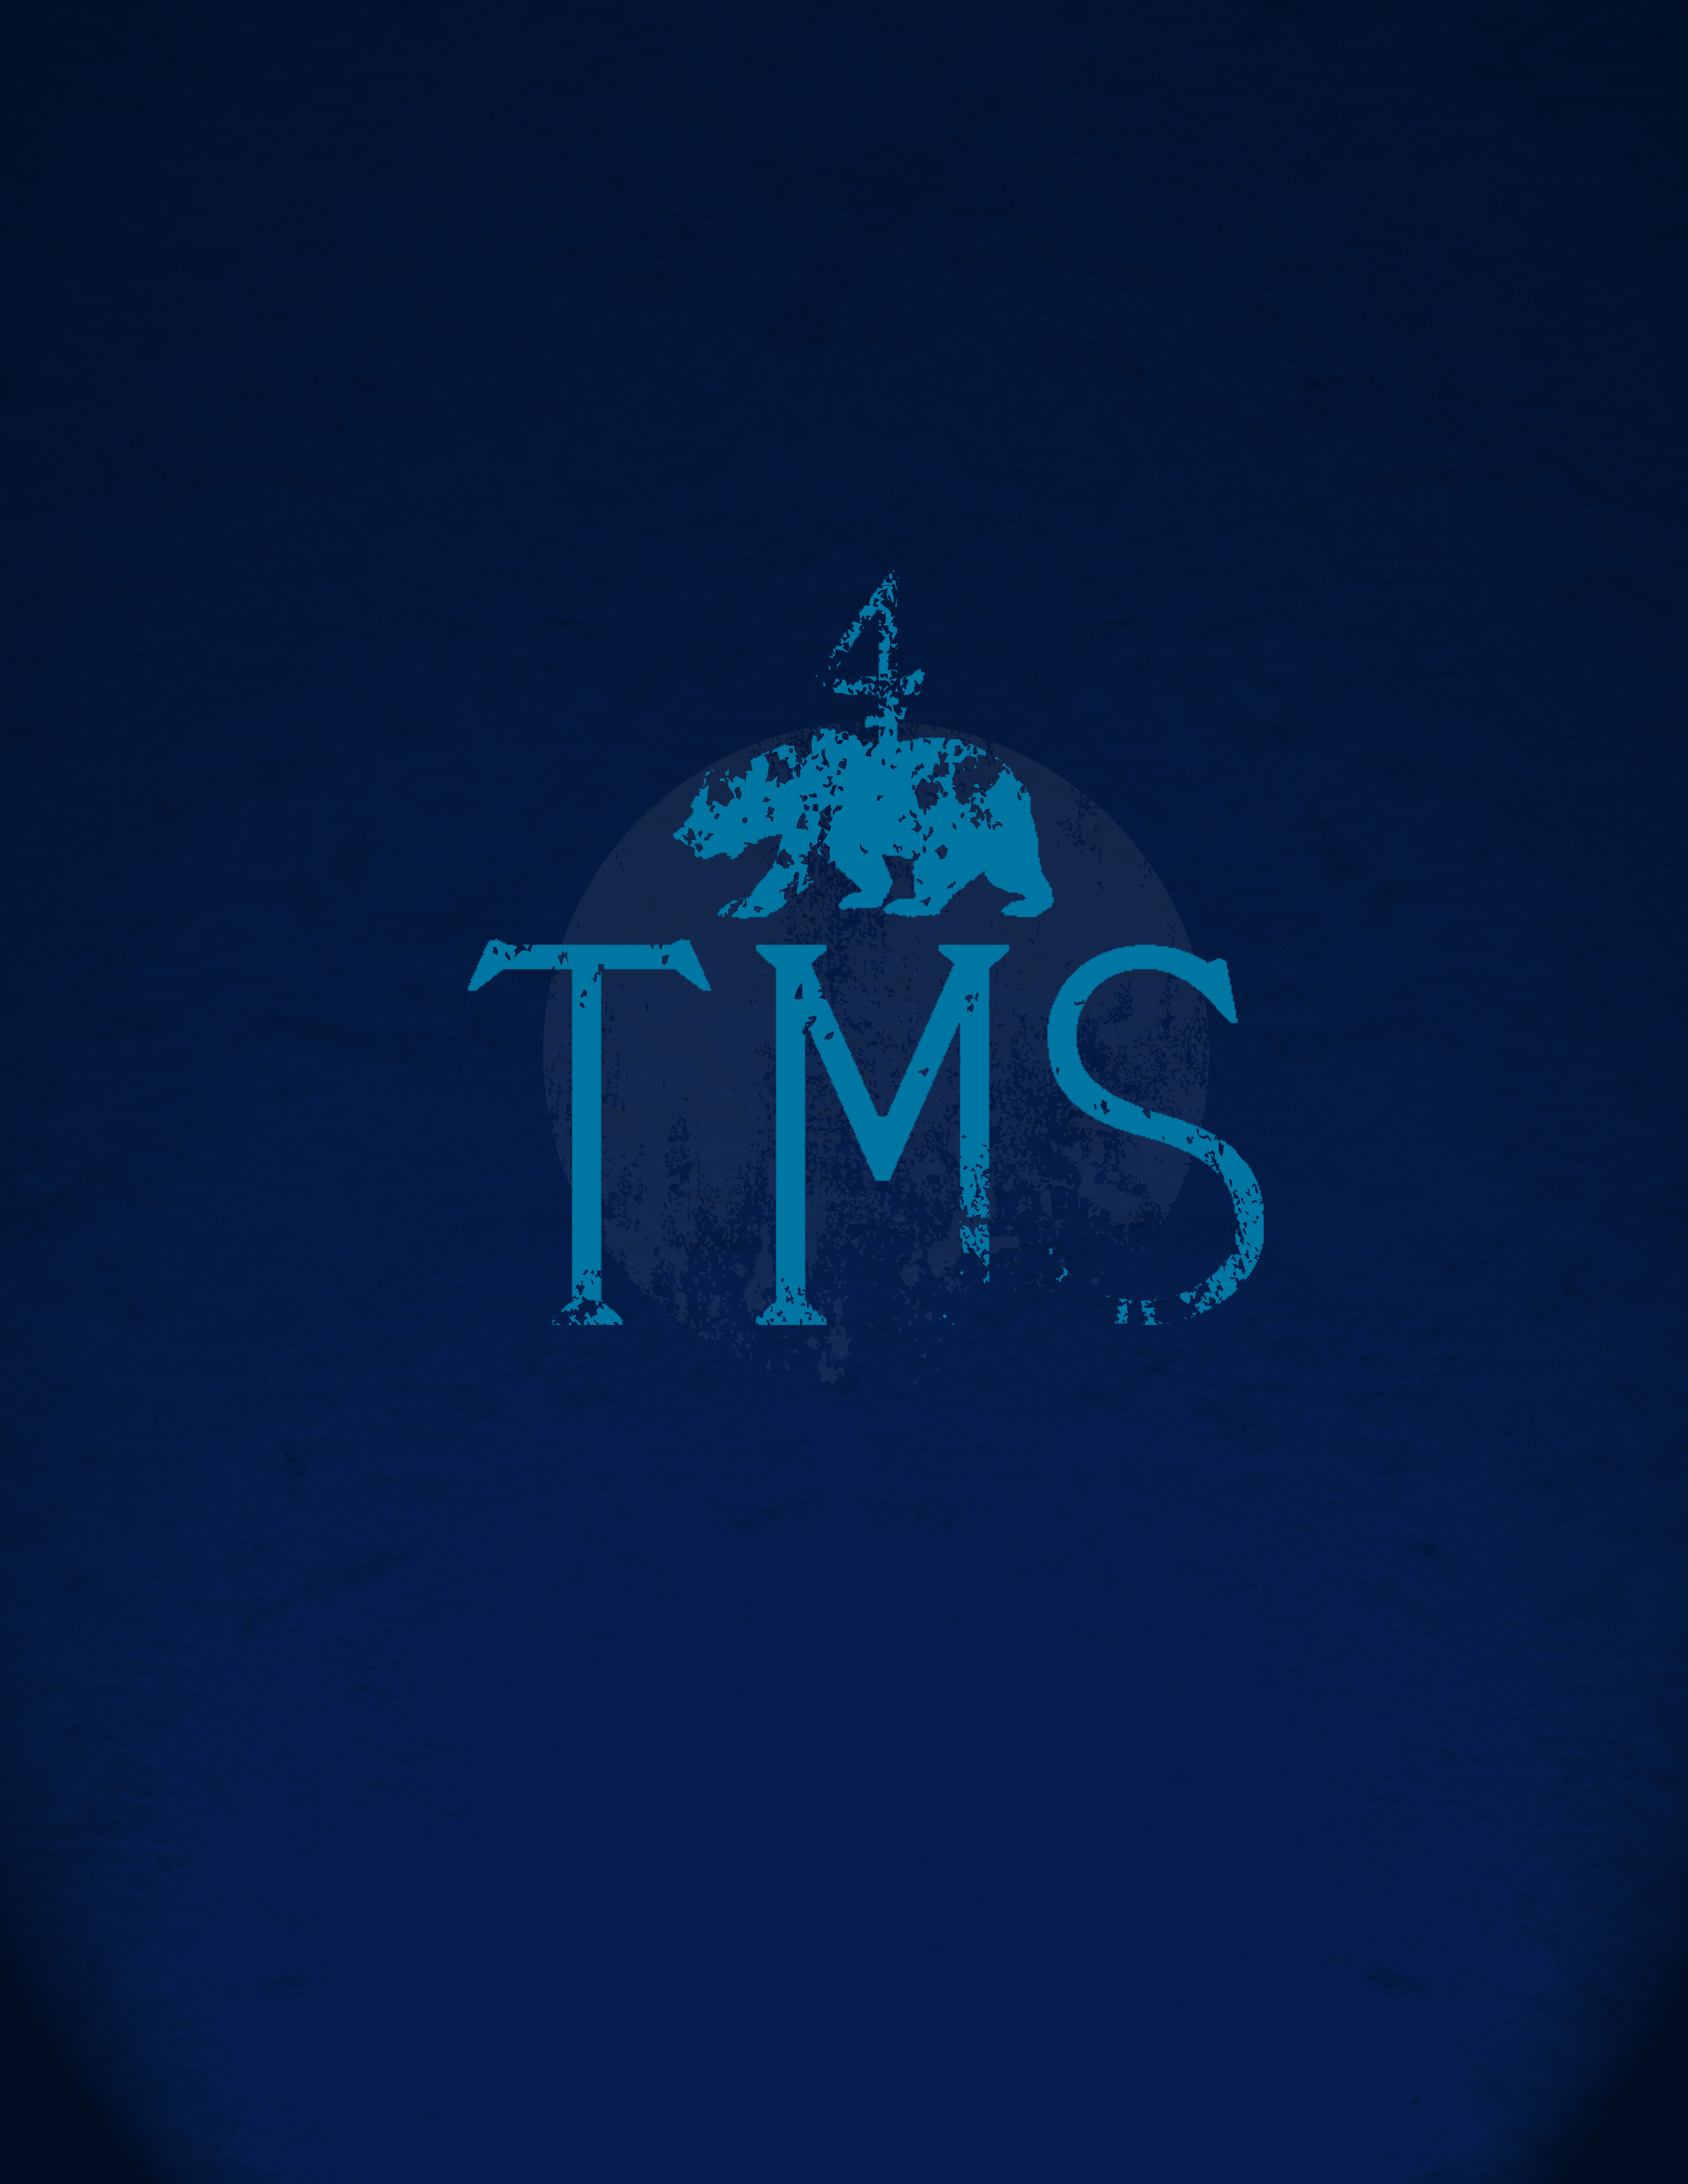 tms 5 worn_blue2.jpg